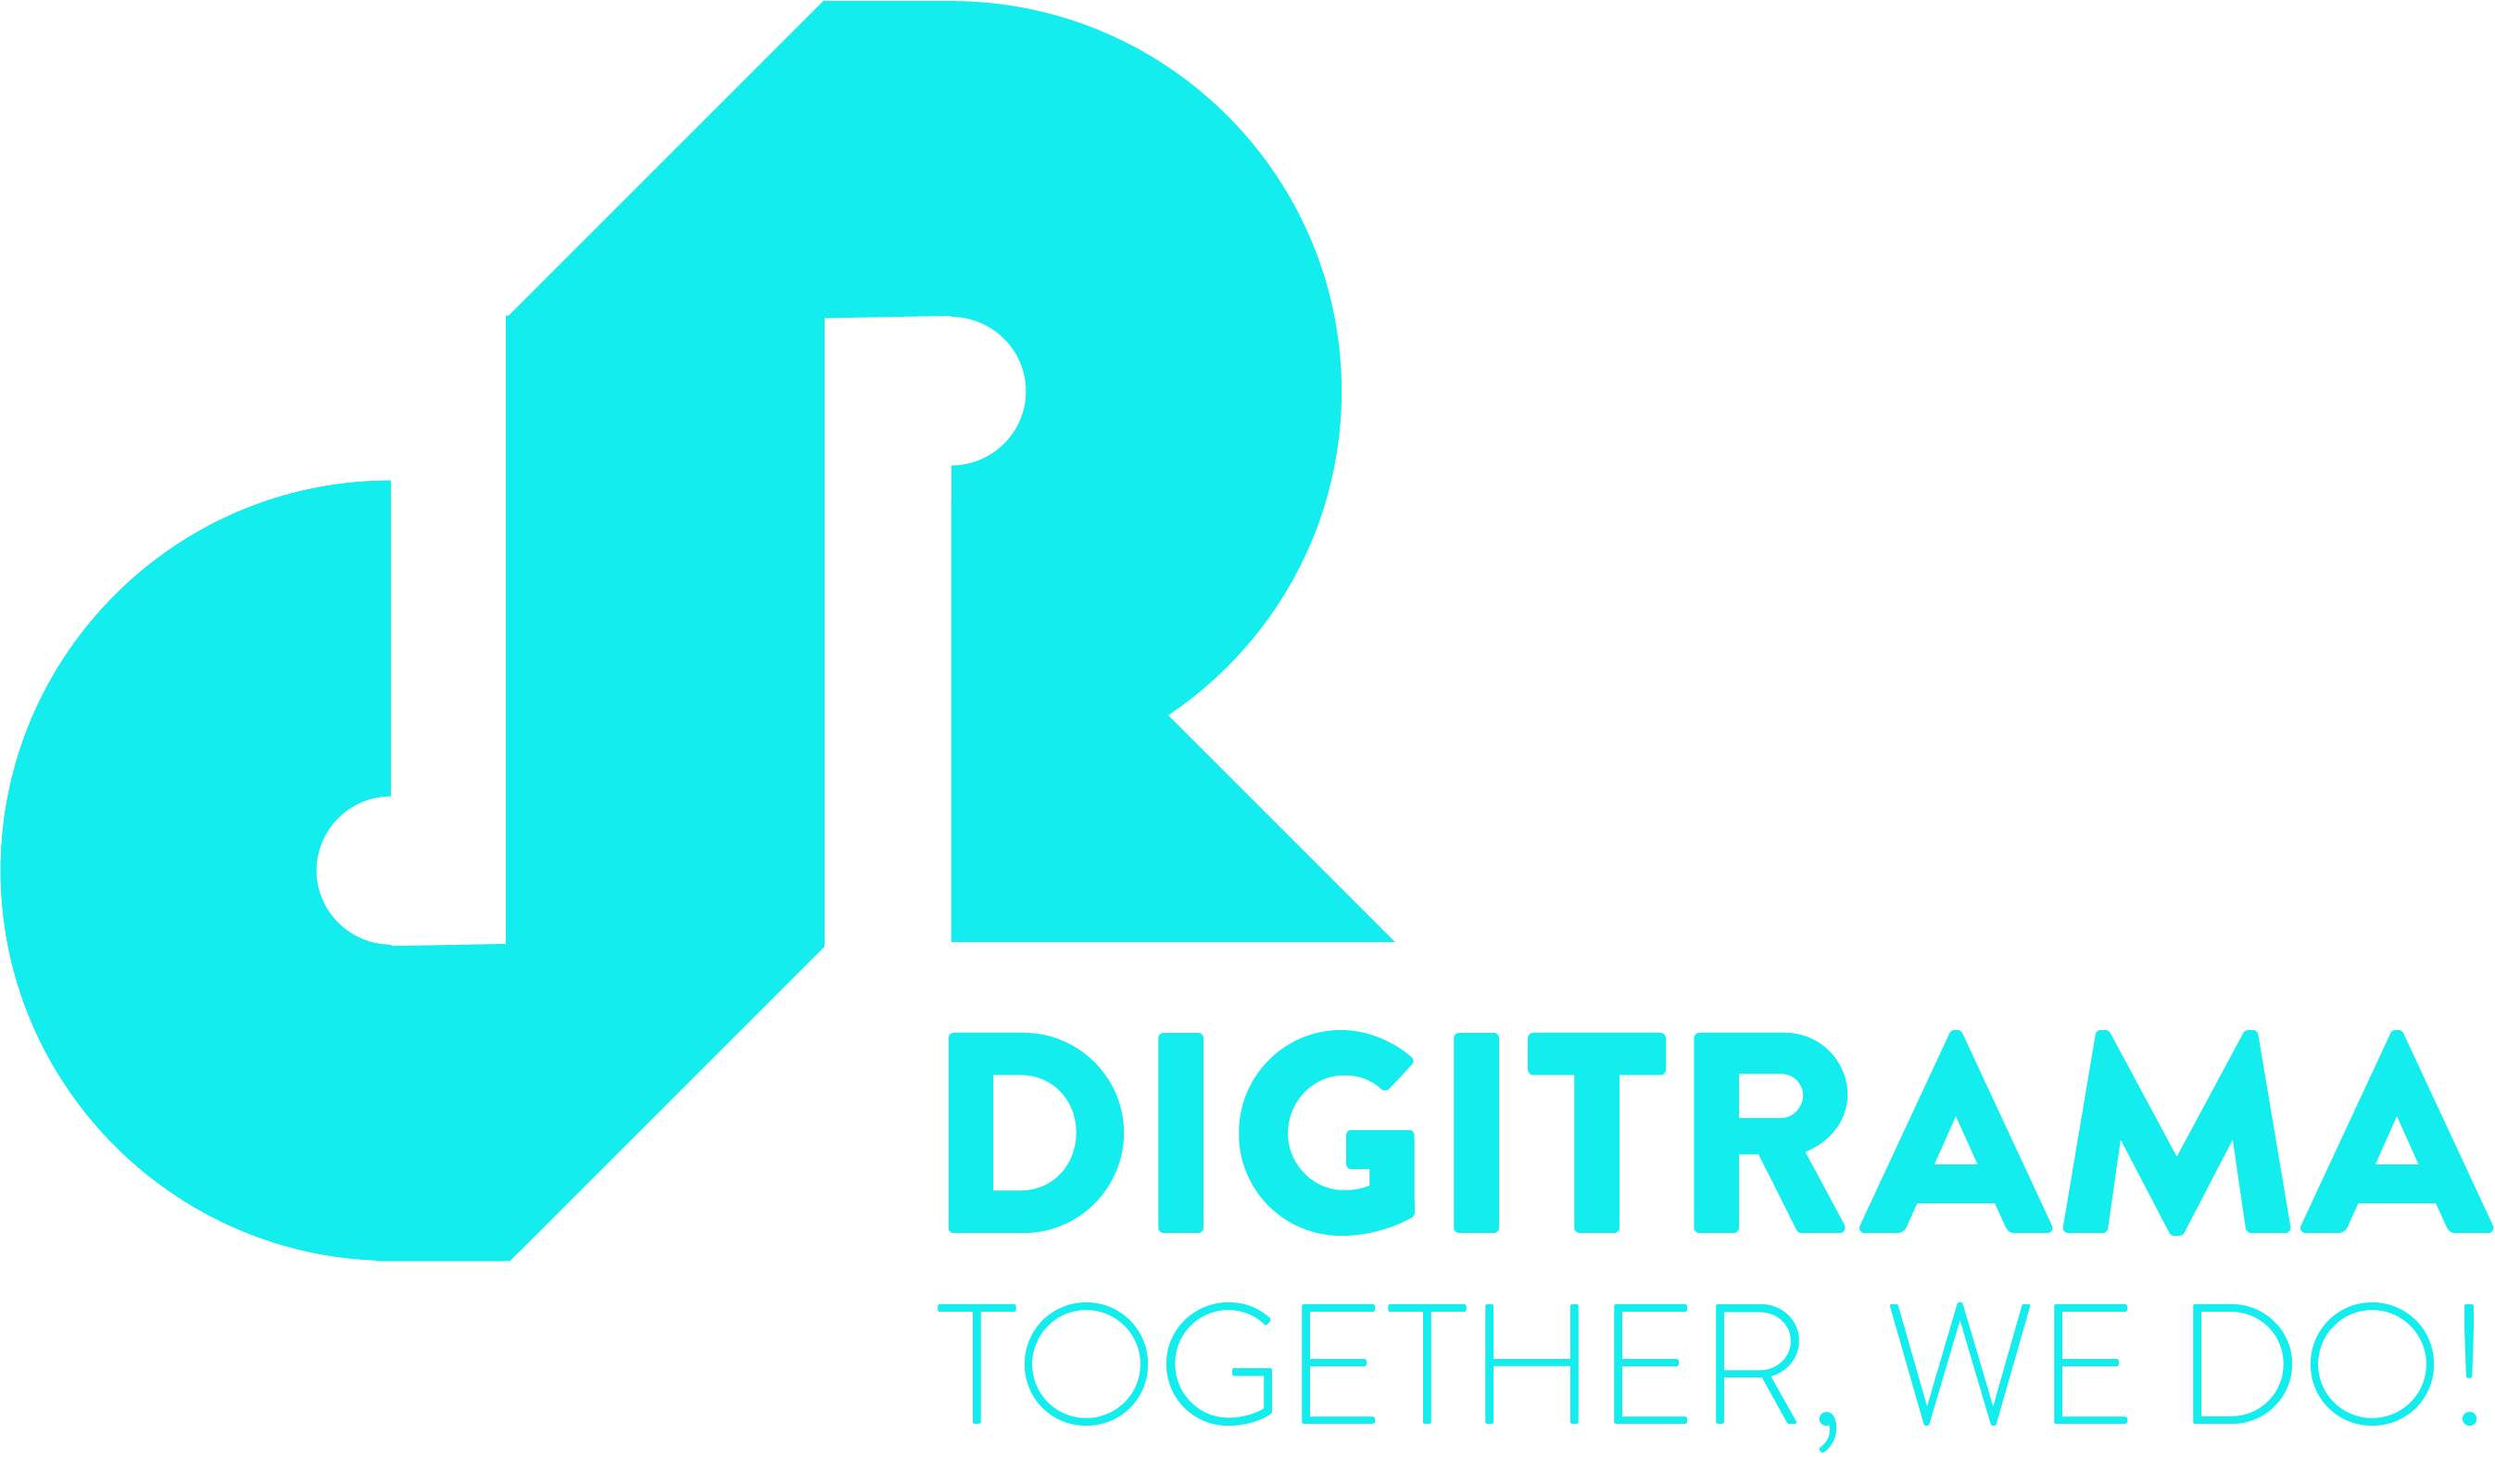 Digitrama | Digital Marketing Agency